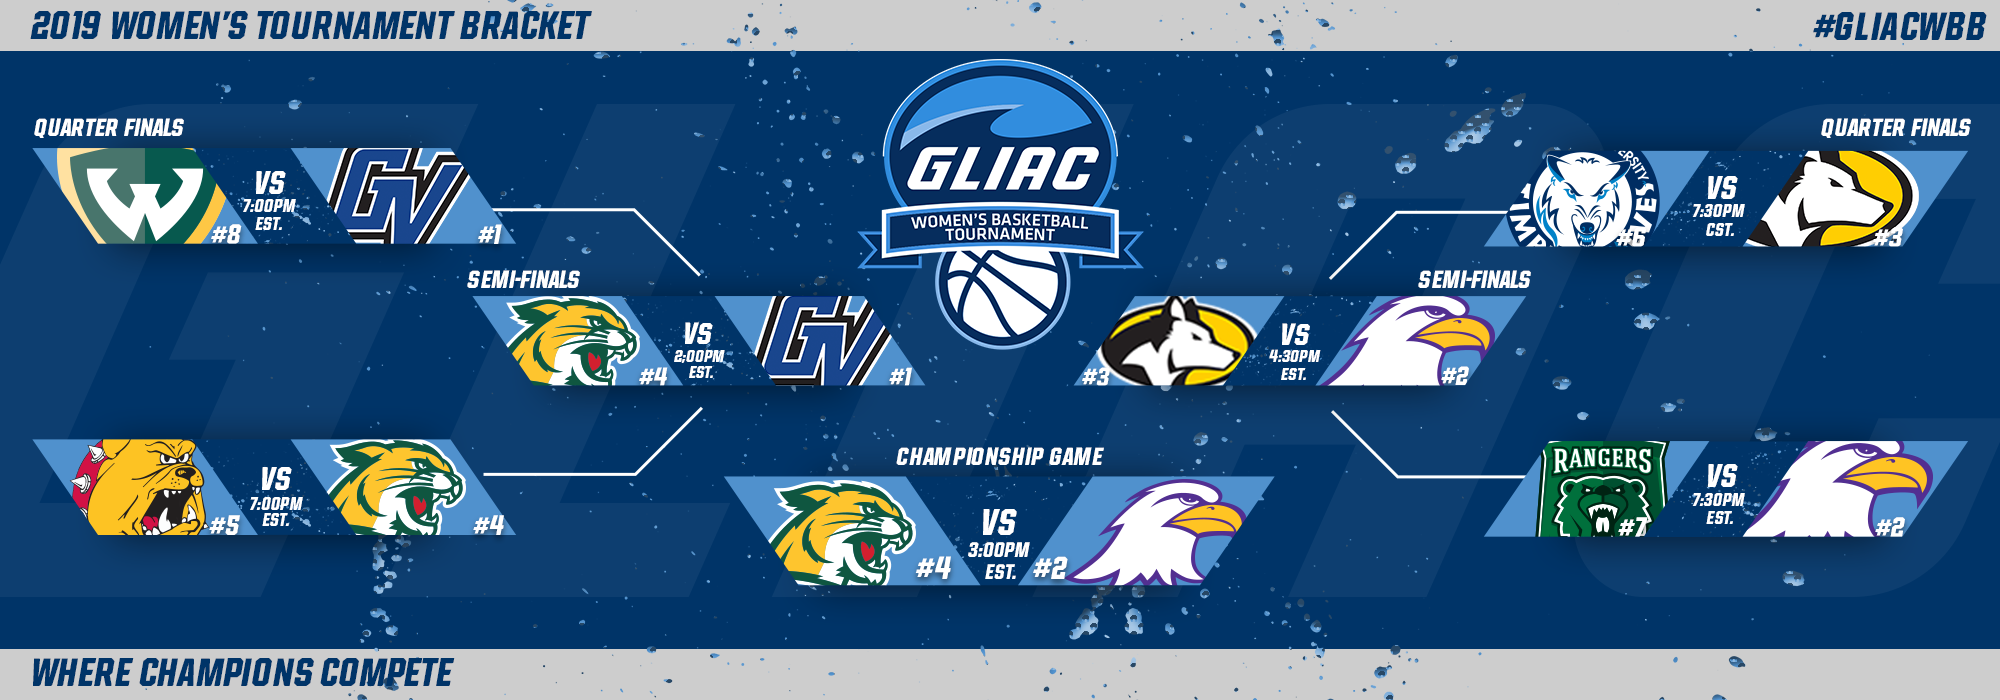 Ashland and Northern Michigan advance to GLIAC Women's Basketball Tournament championship game